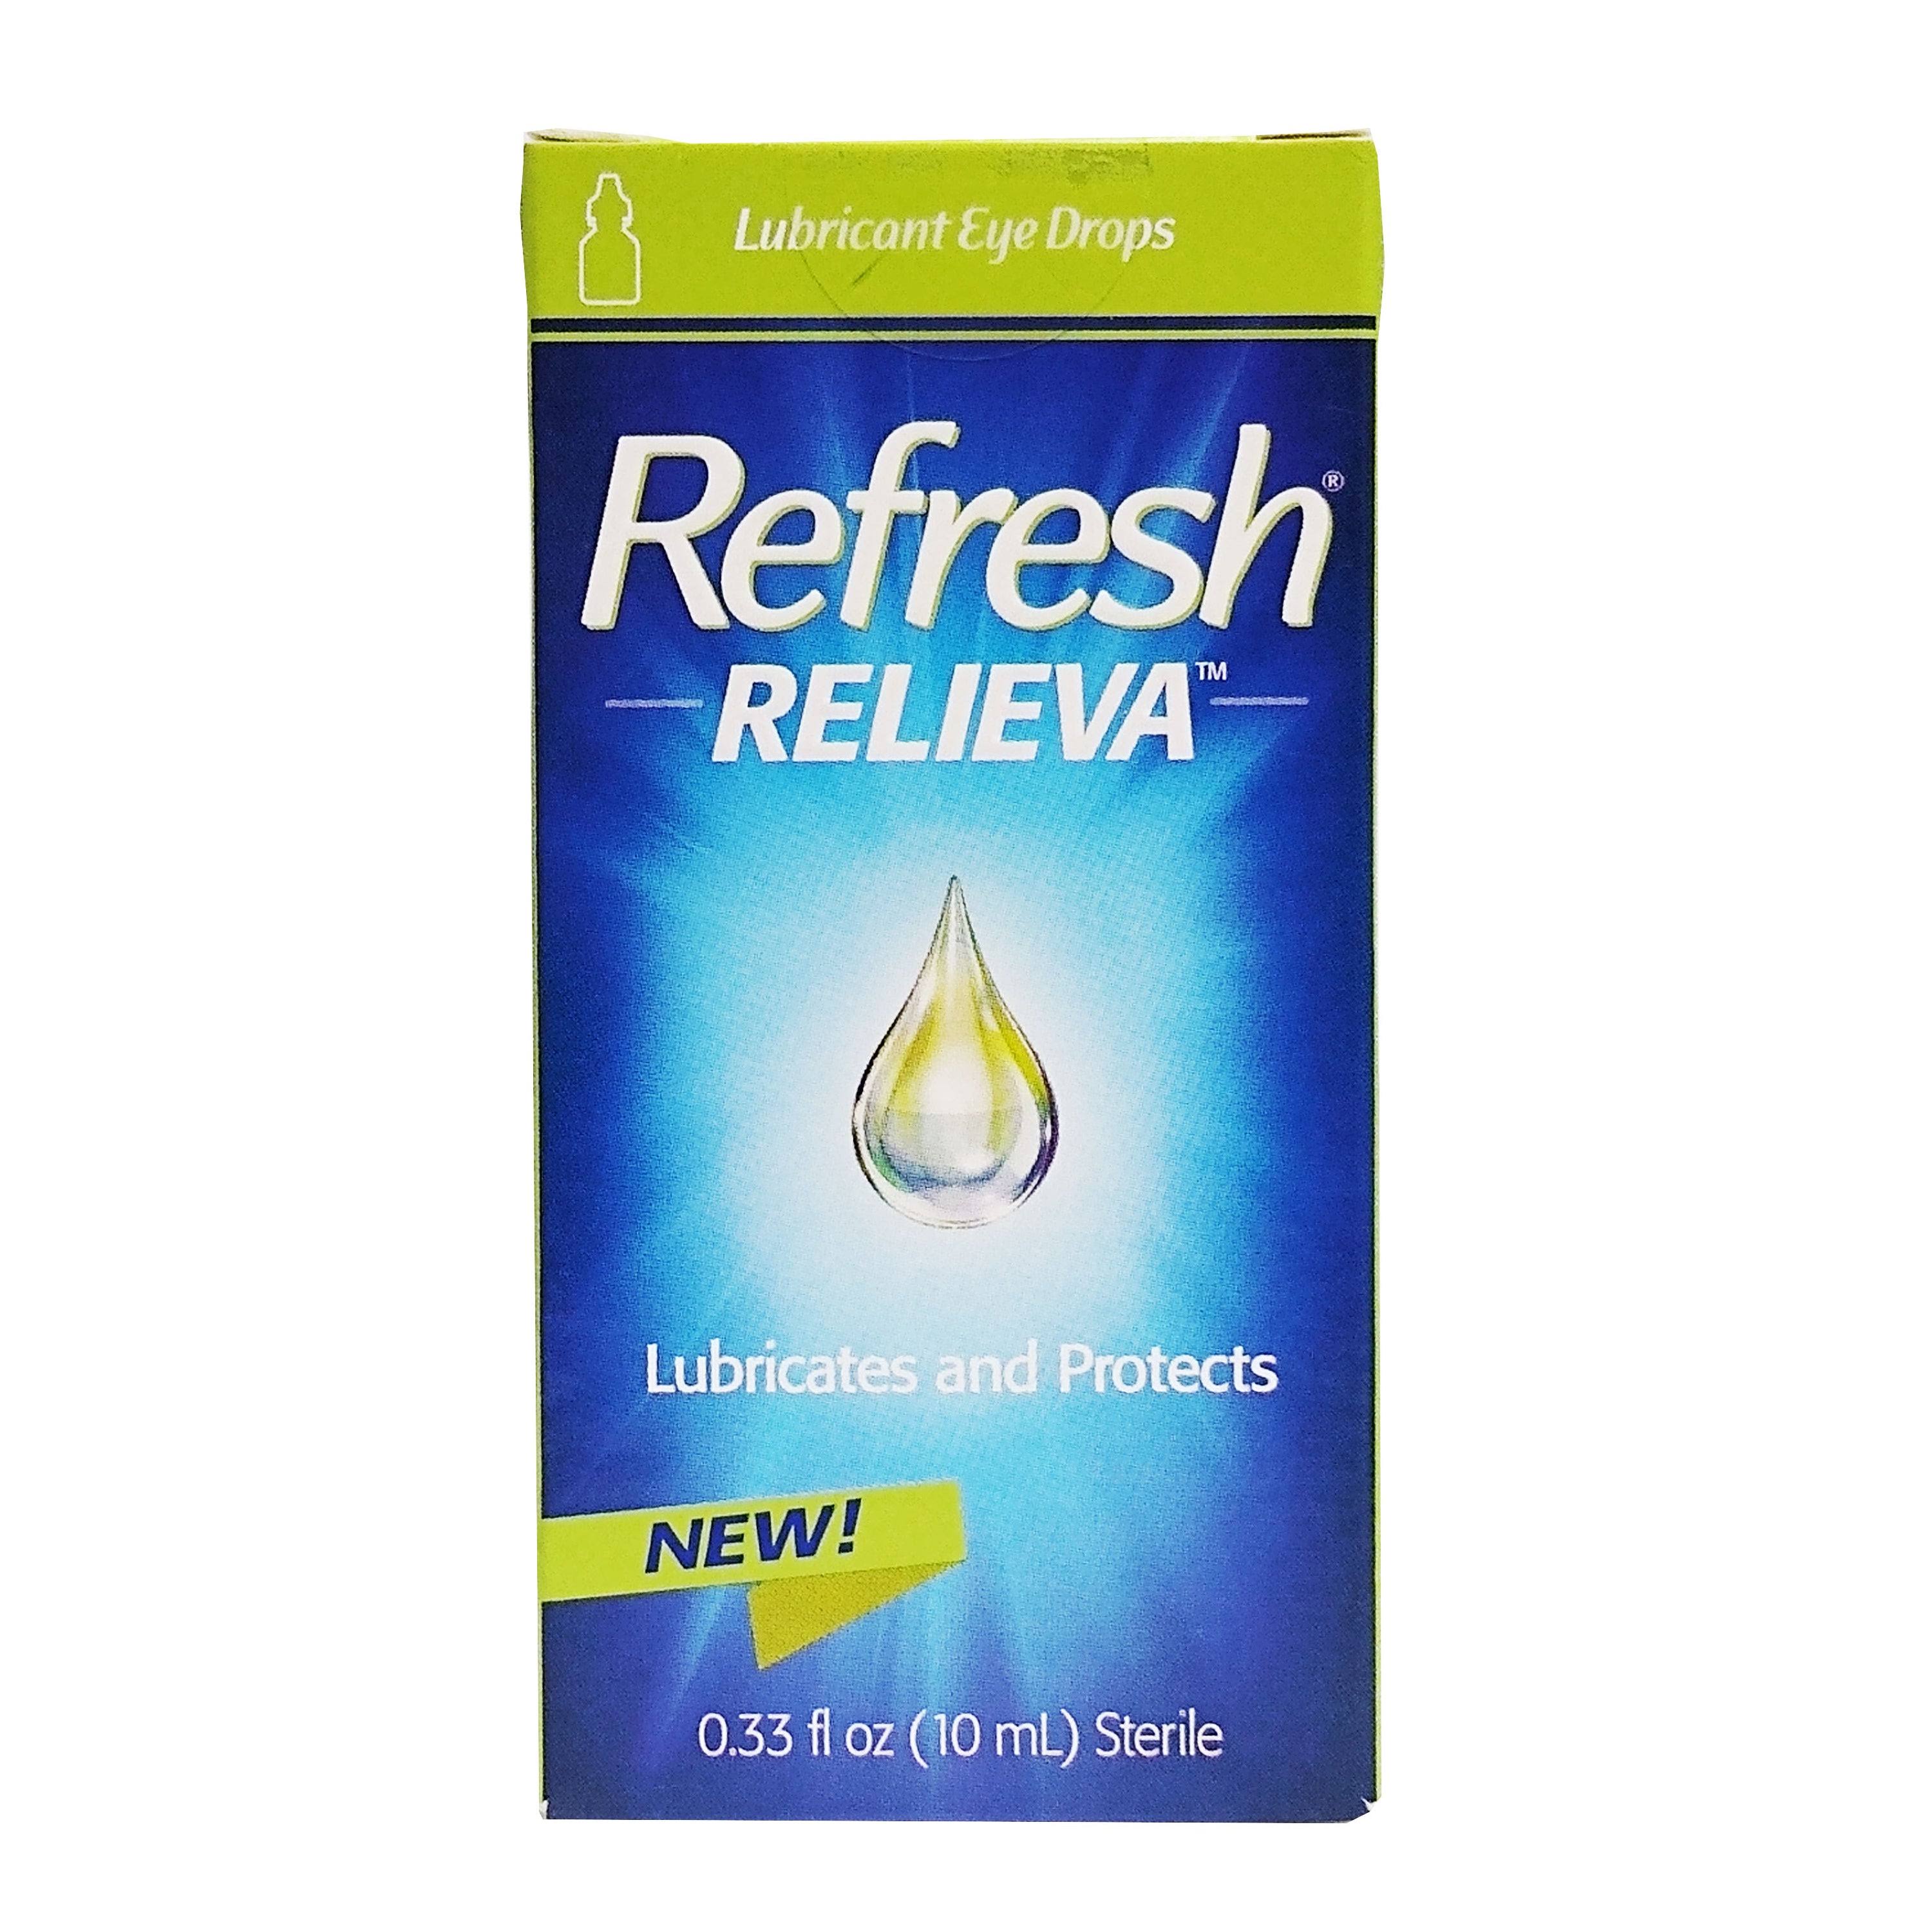 Refresh Relieva Lubricant Eye Drops, 0.33 oz